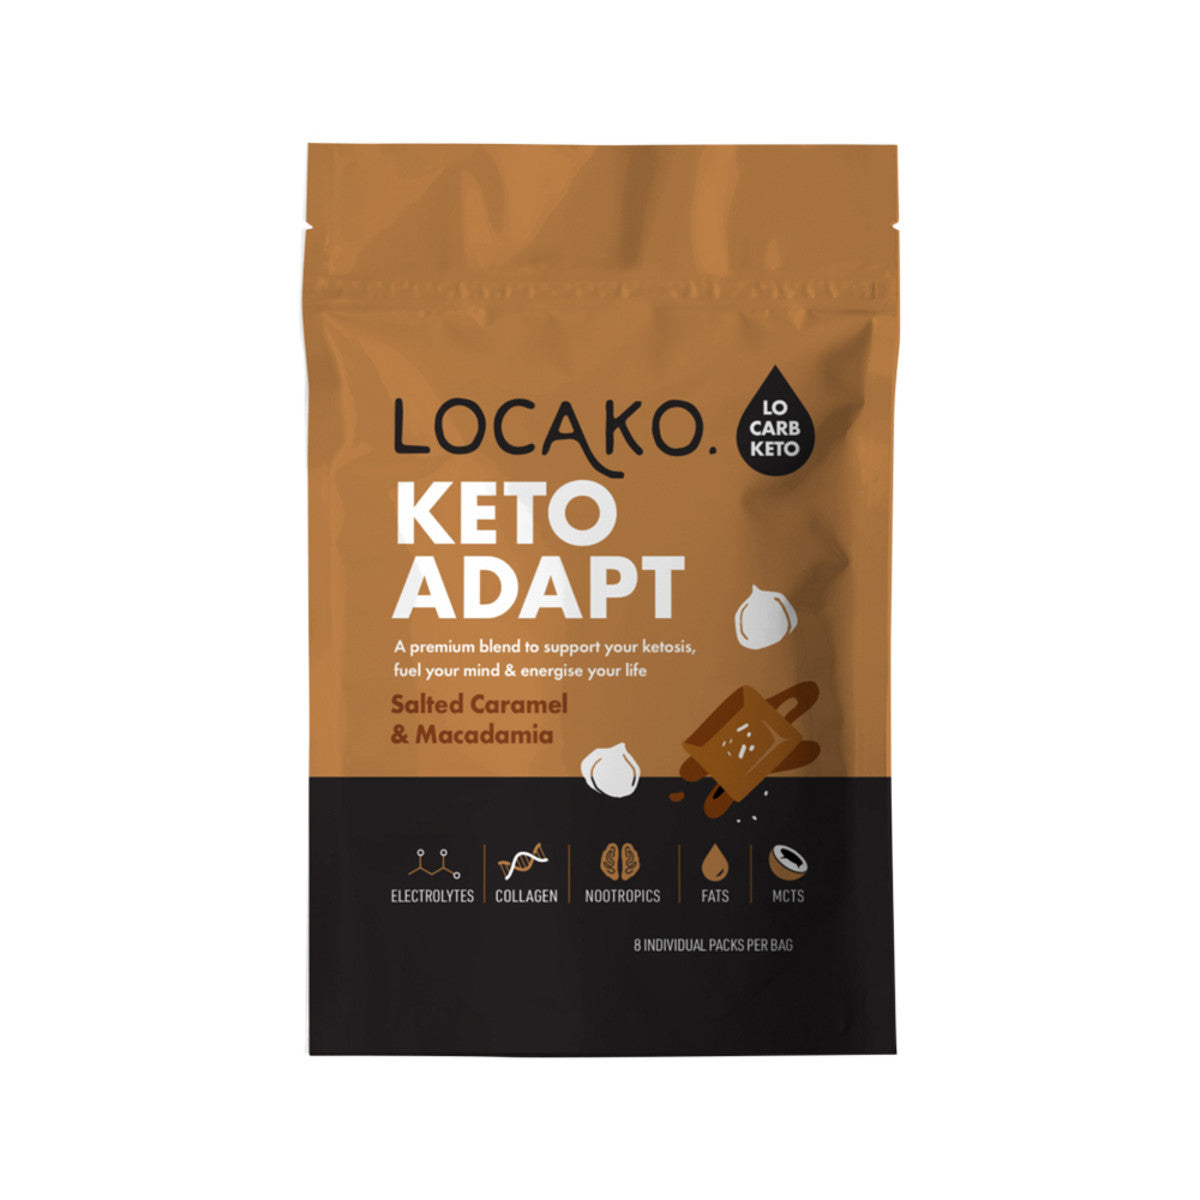 Locako Keto Adapt Salted Caramel Macadamia Sach12g x 8 Pack